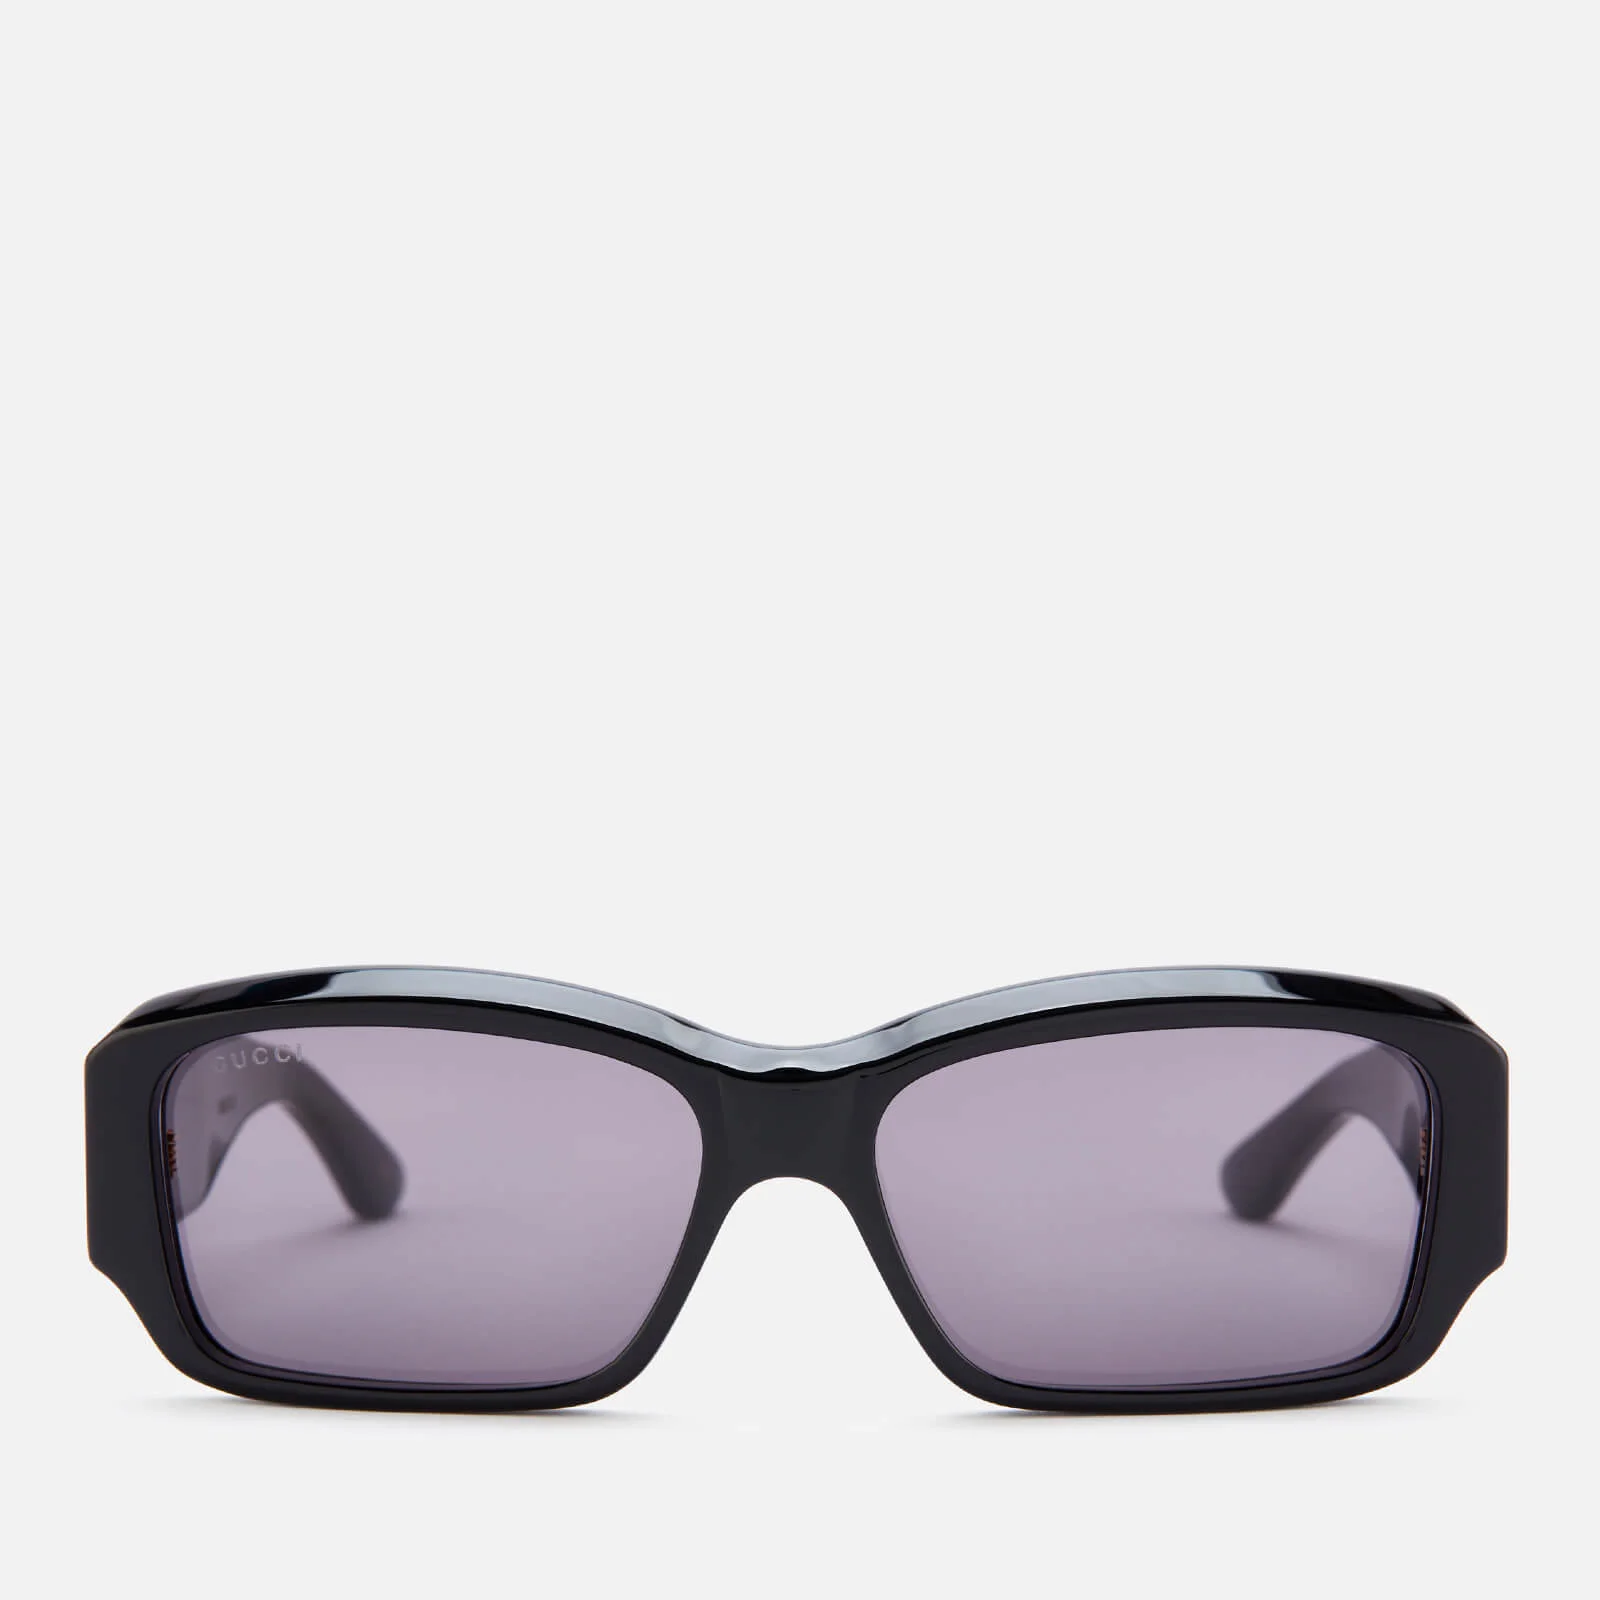 Gucci Men's Bold Dapper Dan Sunglasses - Black/Grey Image 1